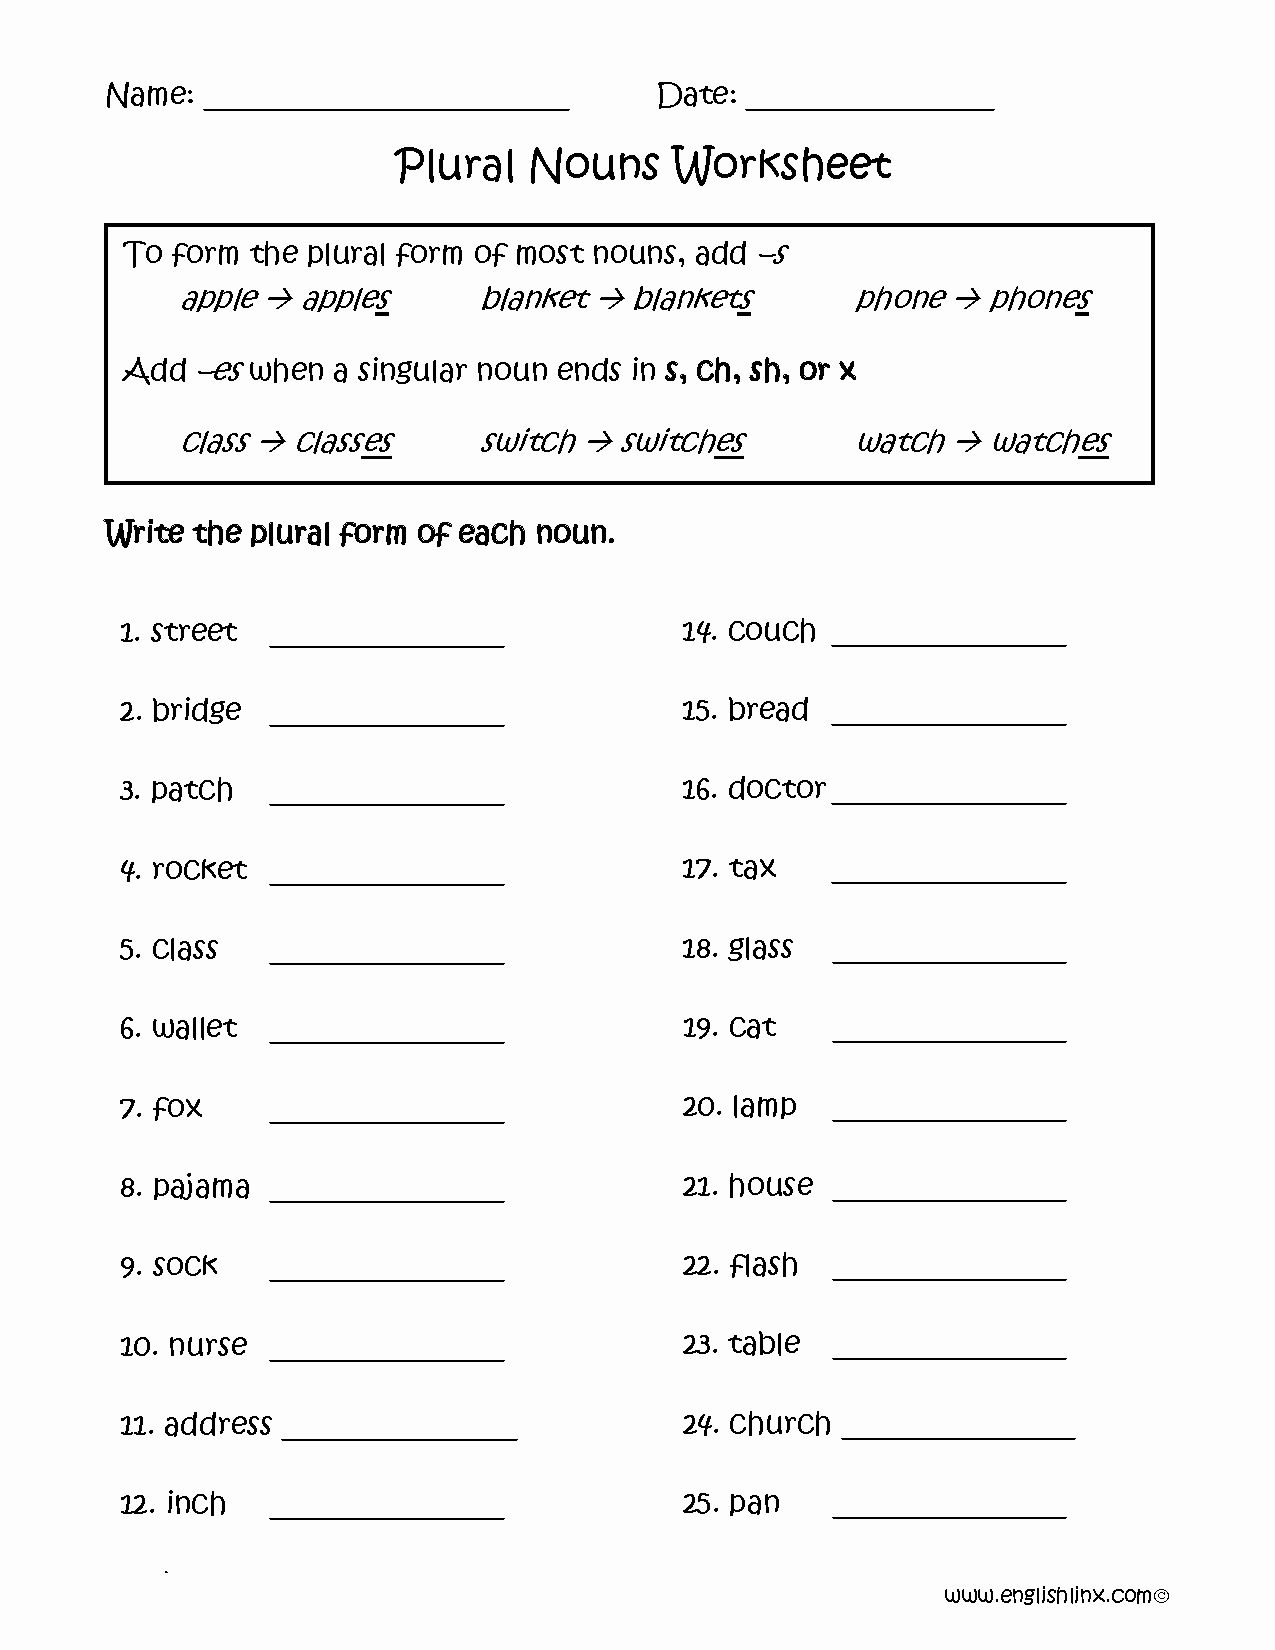 Singular and Plural Nouns Worksheet Unique Nouns Worksheets